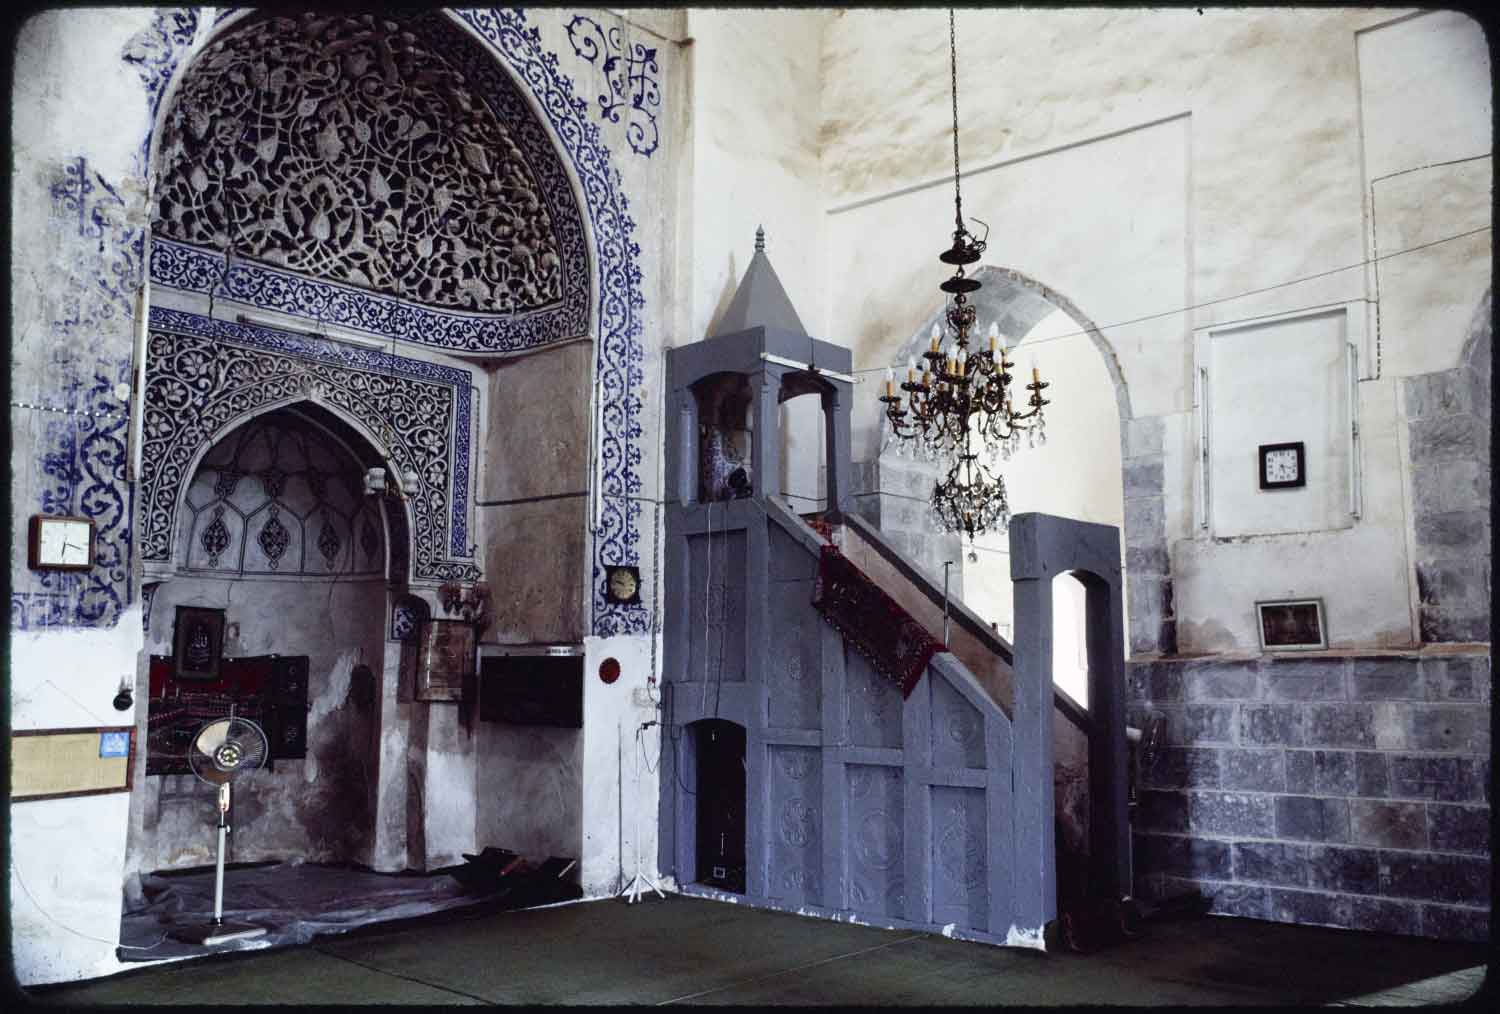 Interior view of prayer hall showing mihrab and minbar.